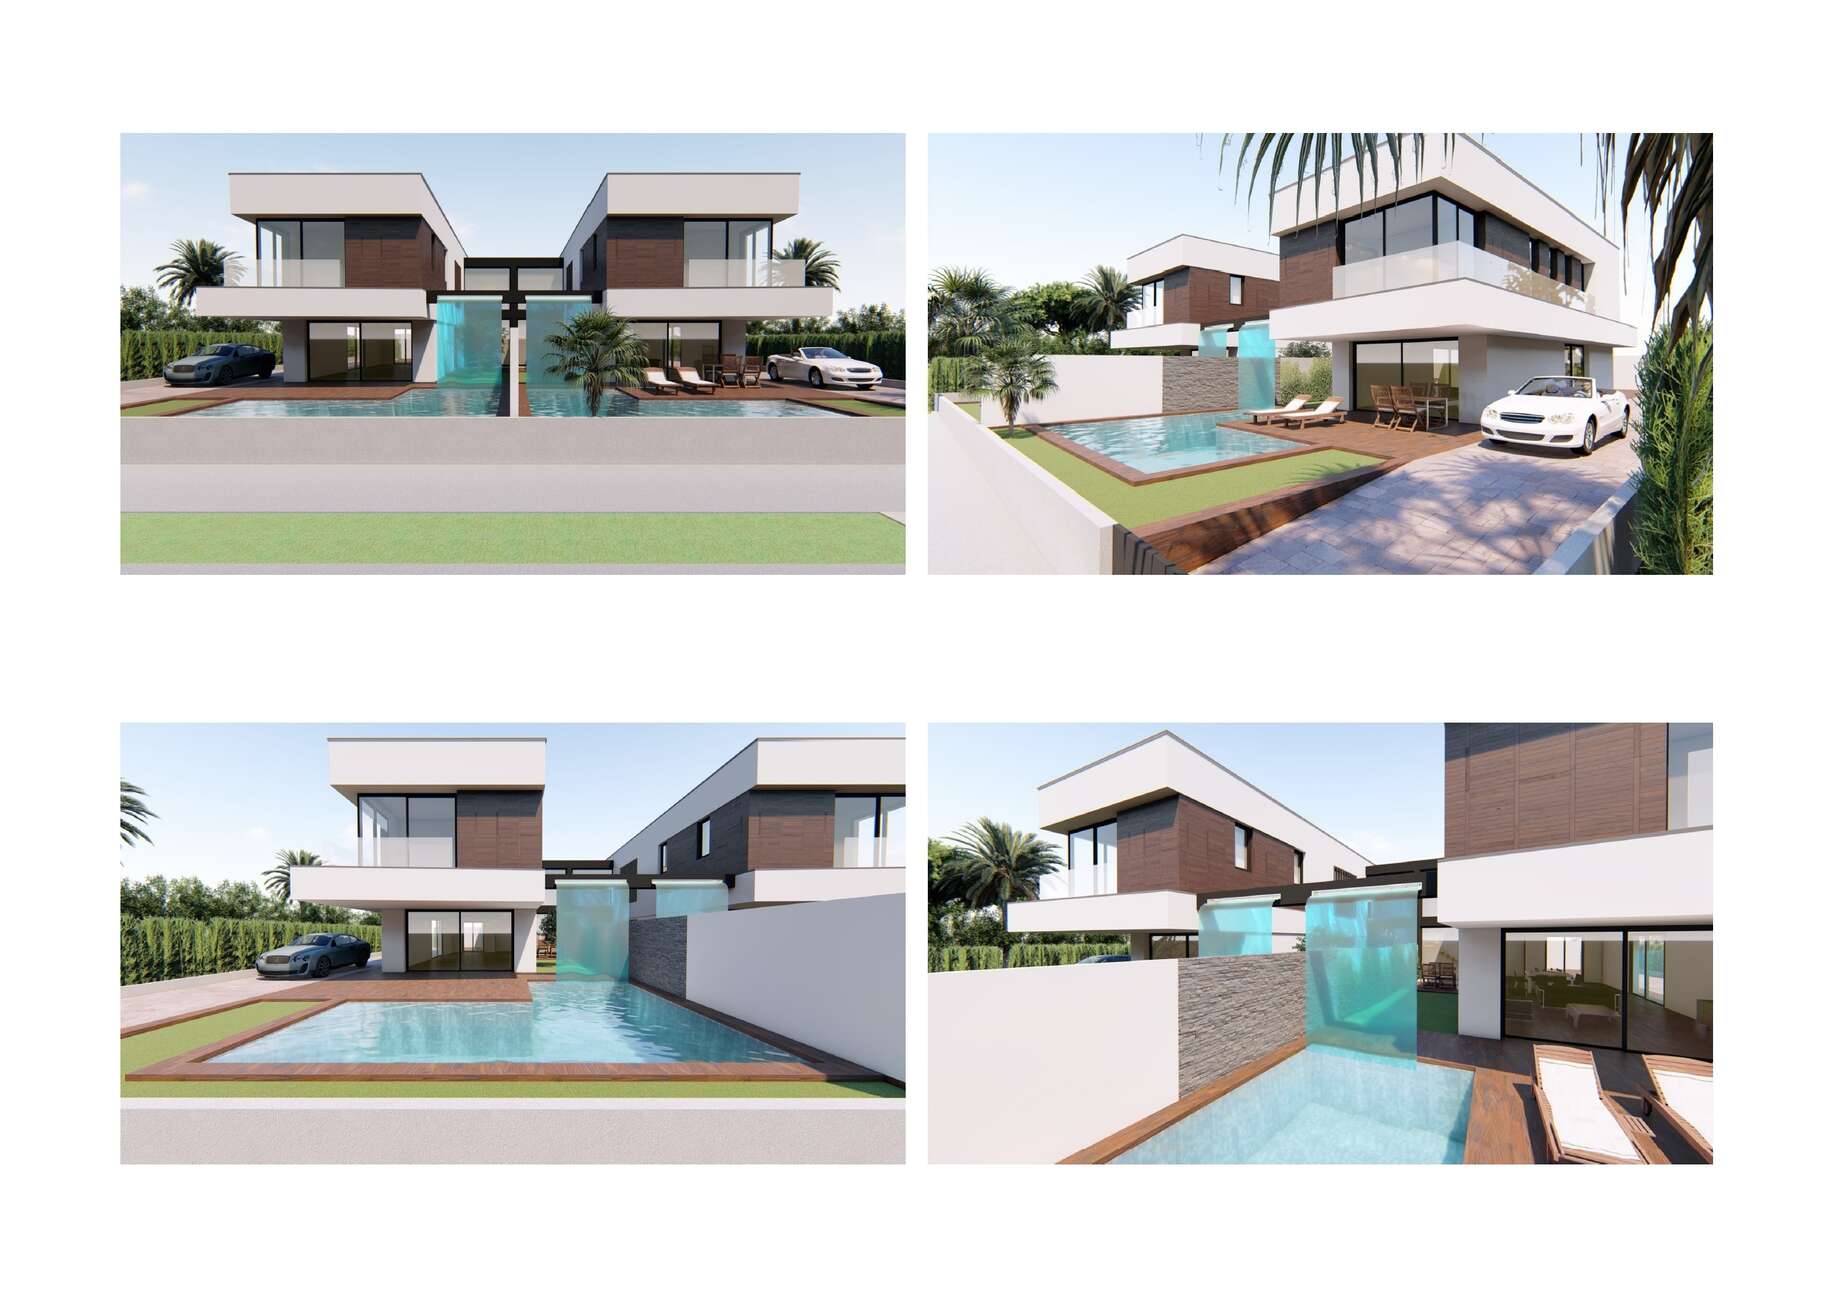 Casa de estilo moderno en construcción con piscina Empuriabrava,venta ( B )